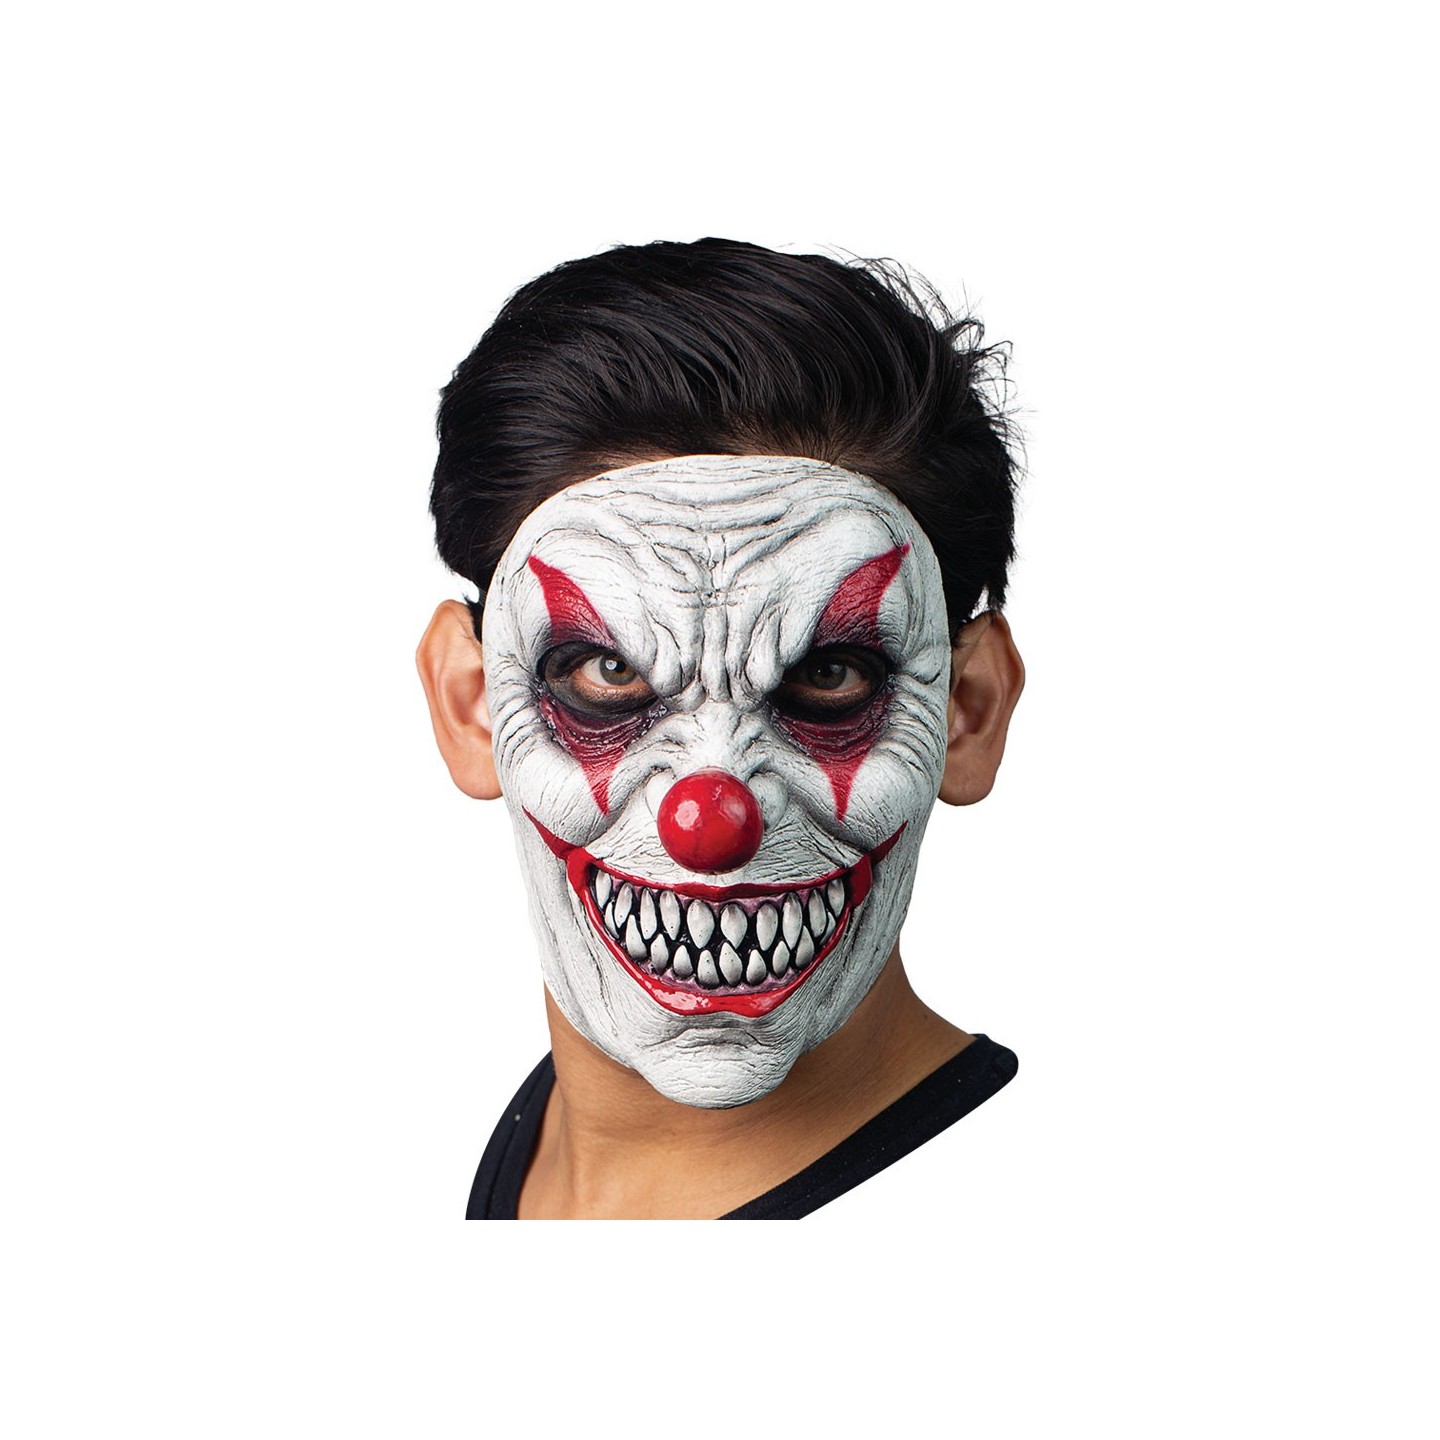 enge Halloween maskers killer naughty clown masker